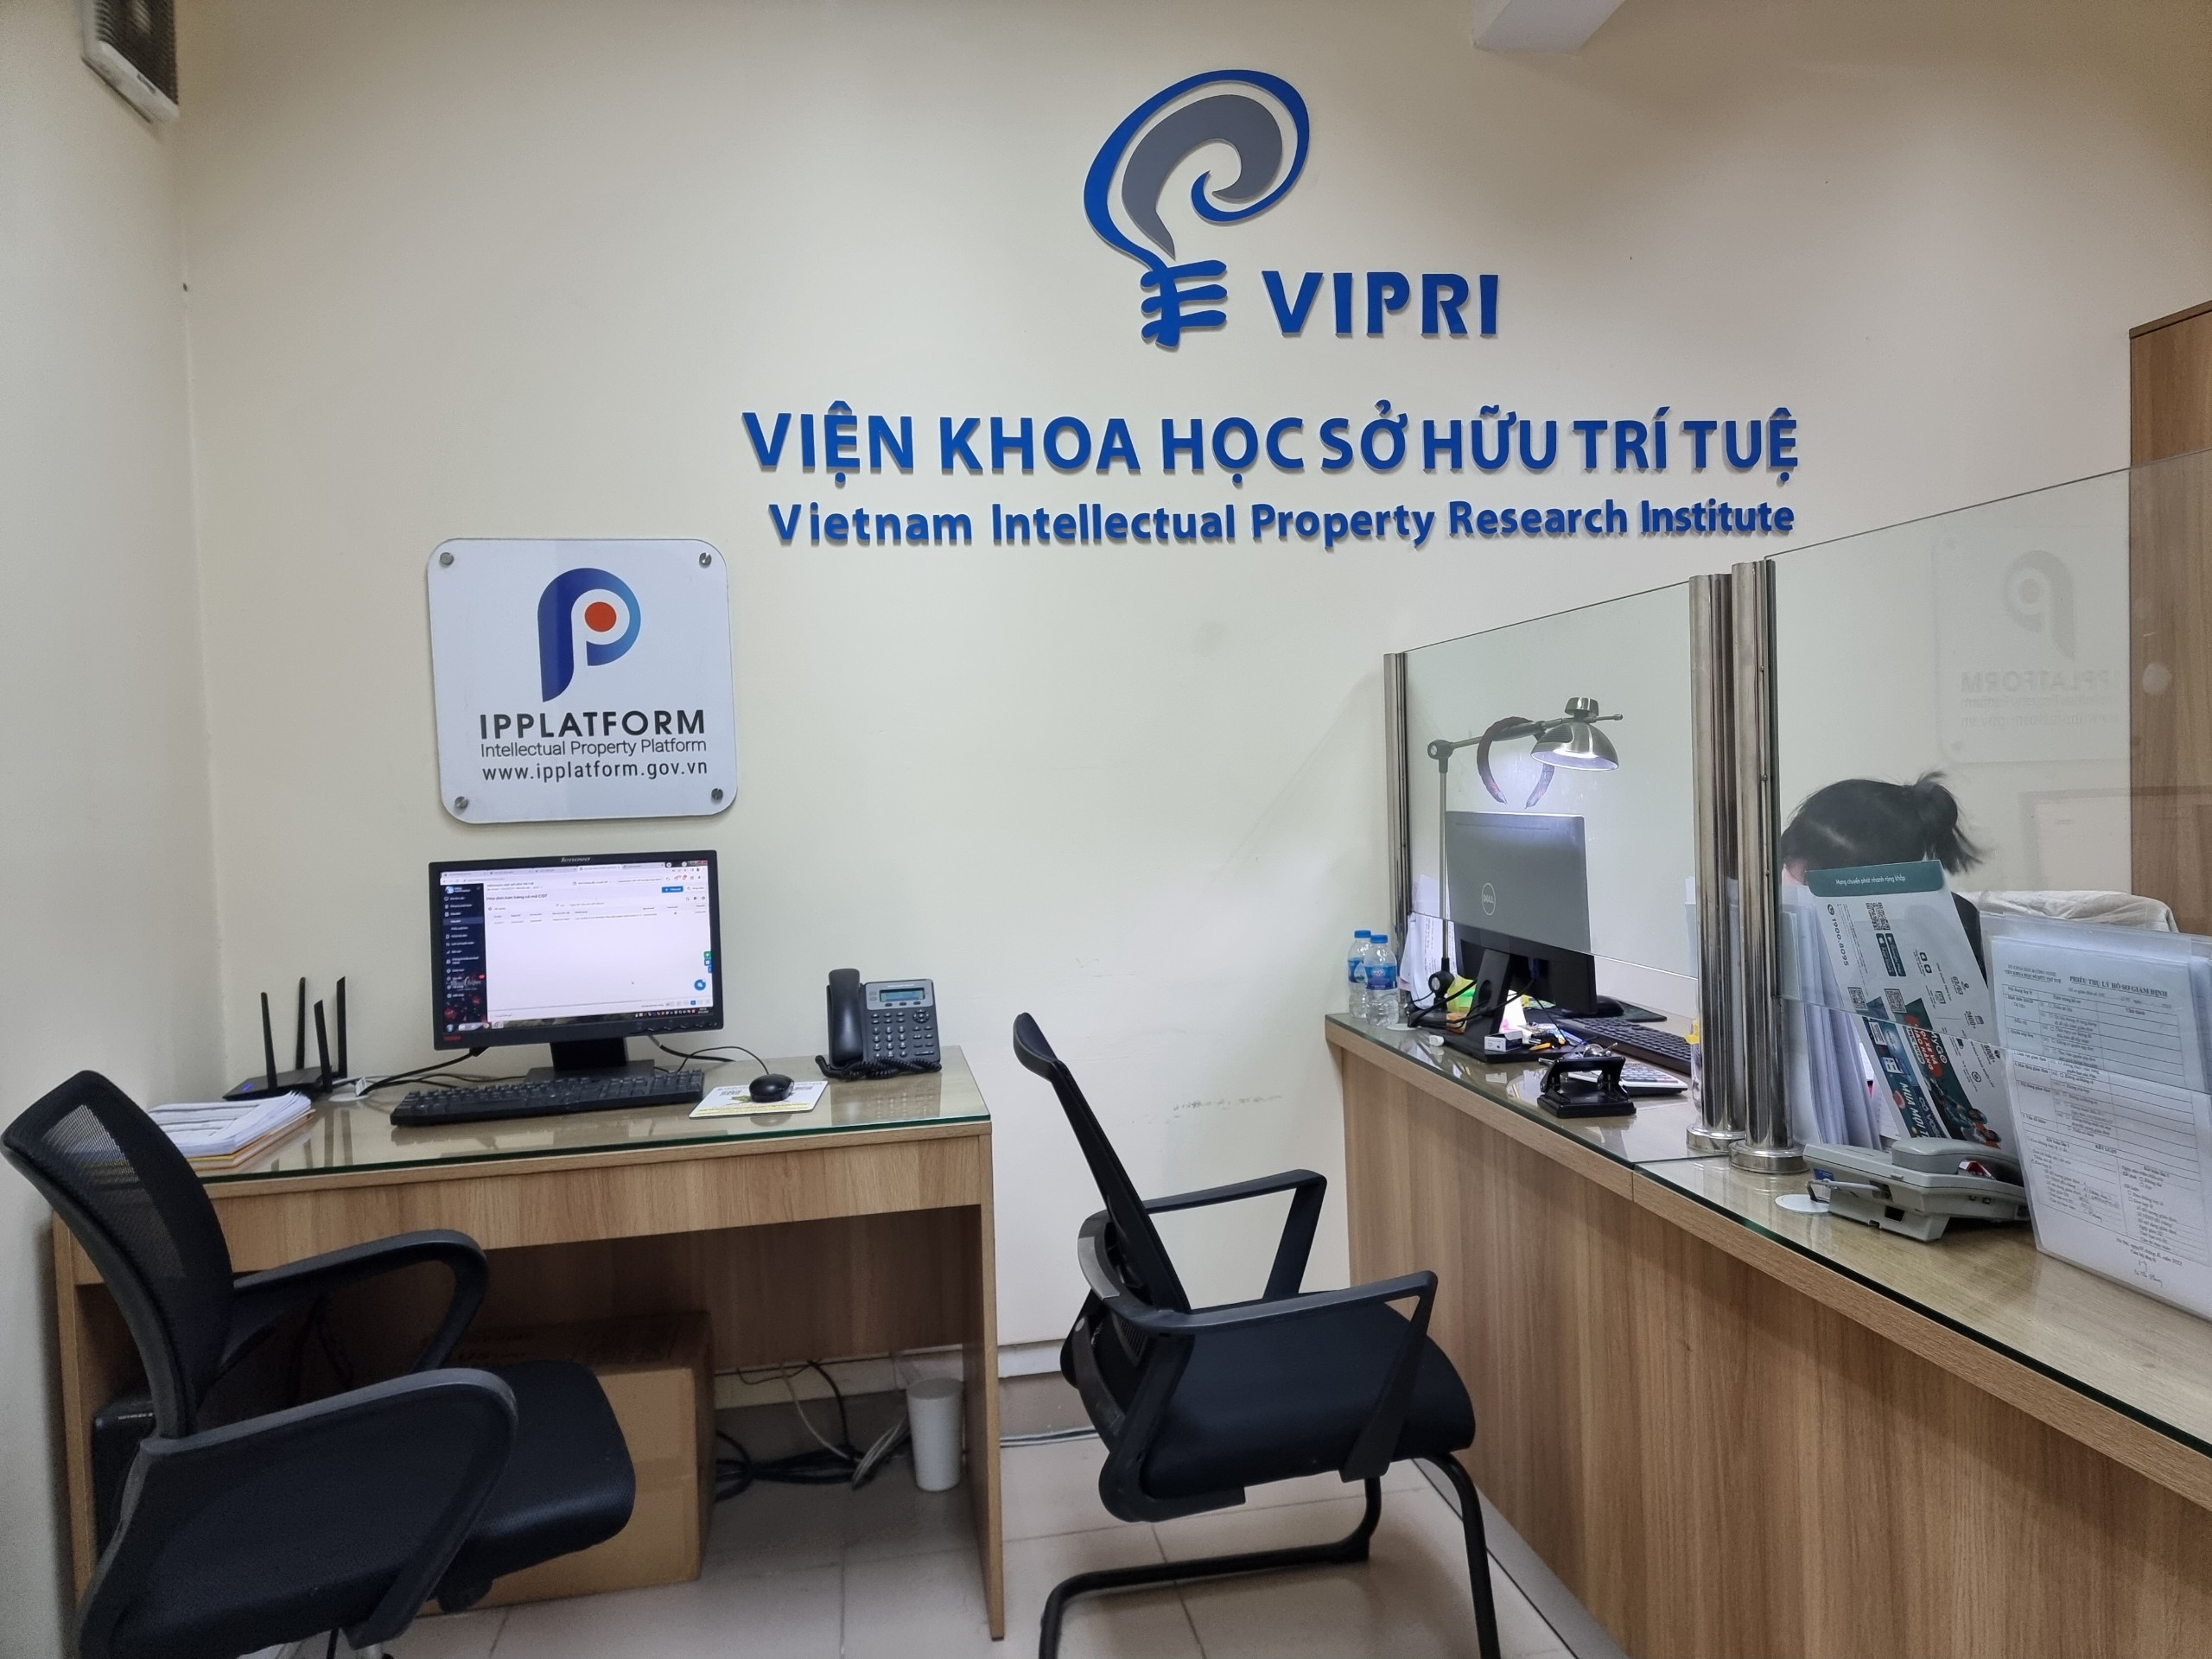 The Vietnam Intellectual Property Research Institute